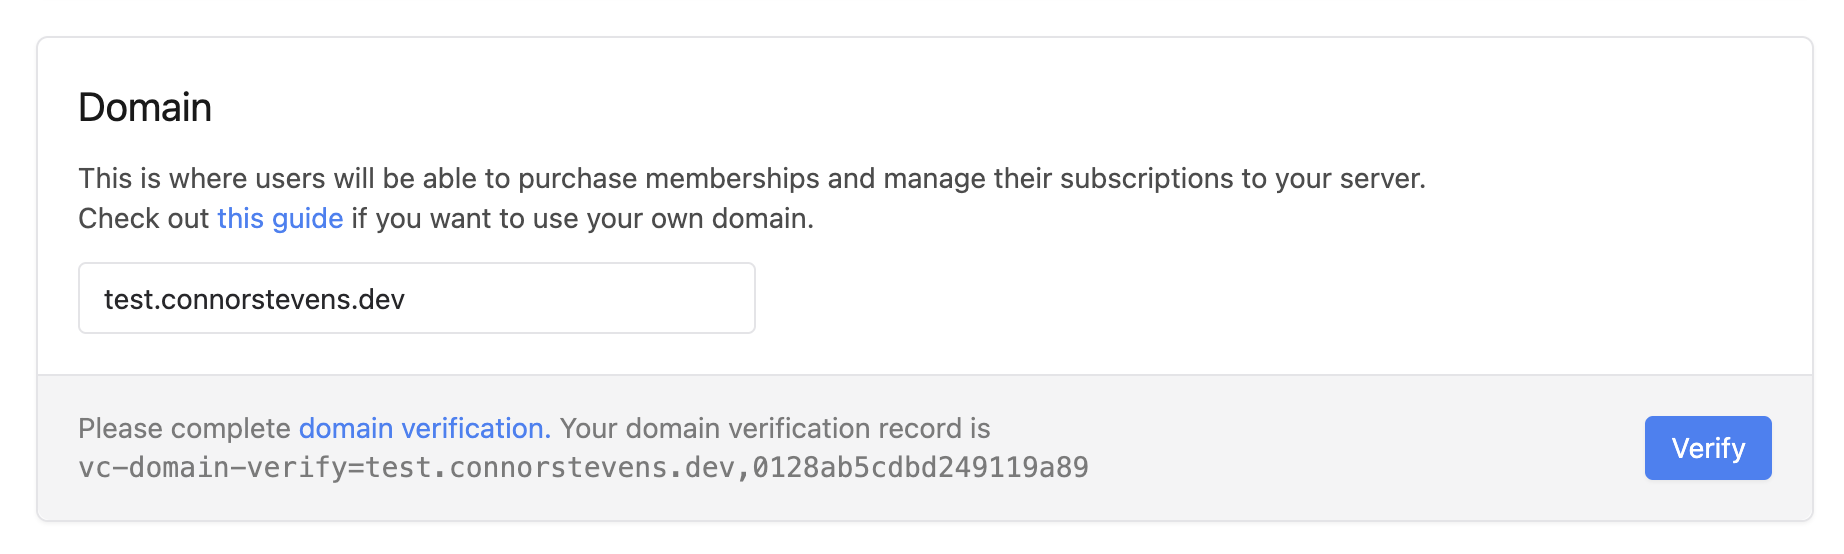 Domain Verification UI